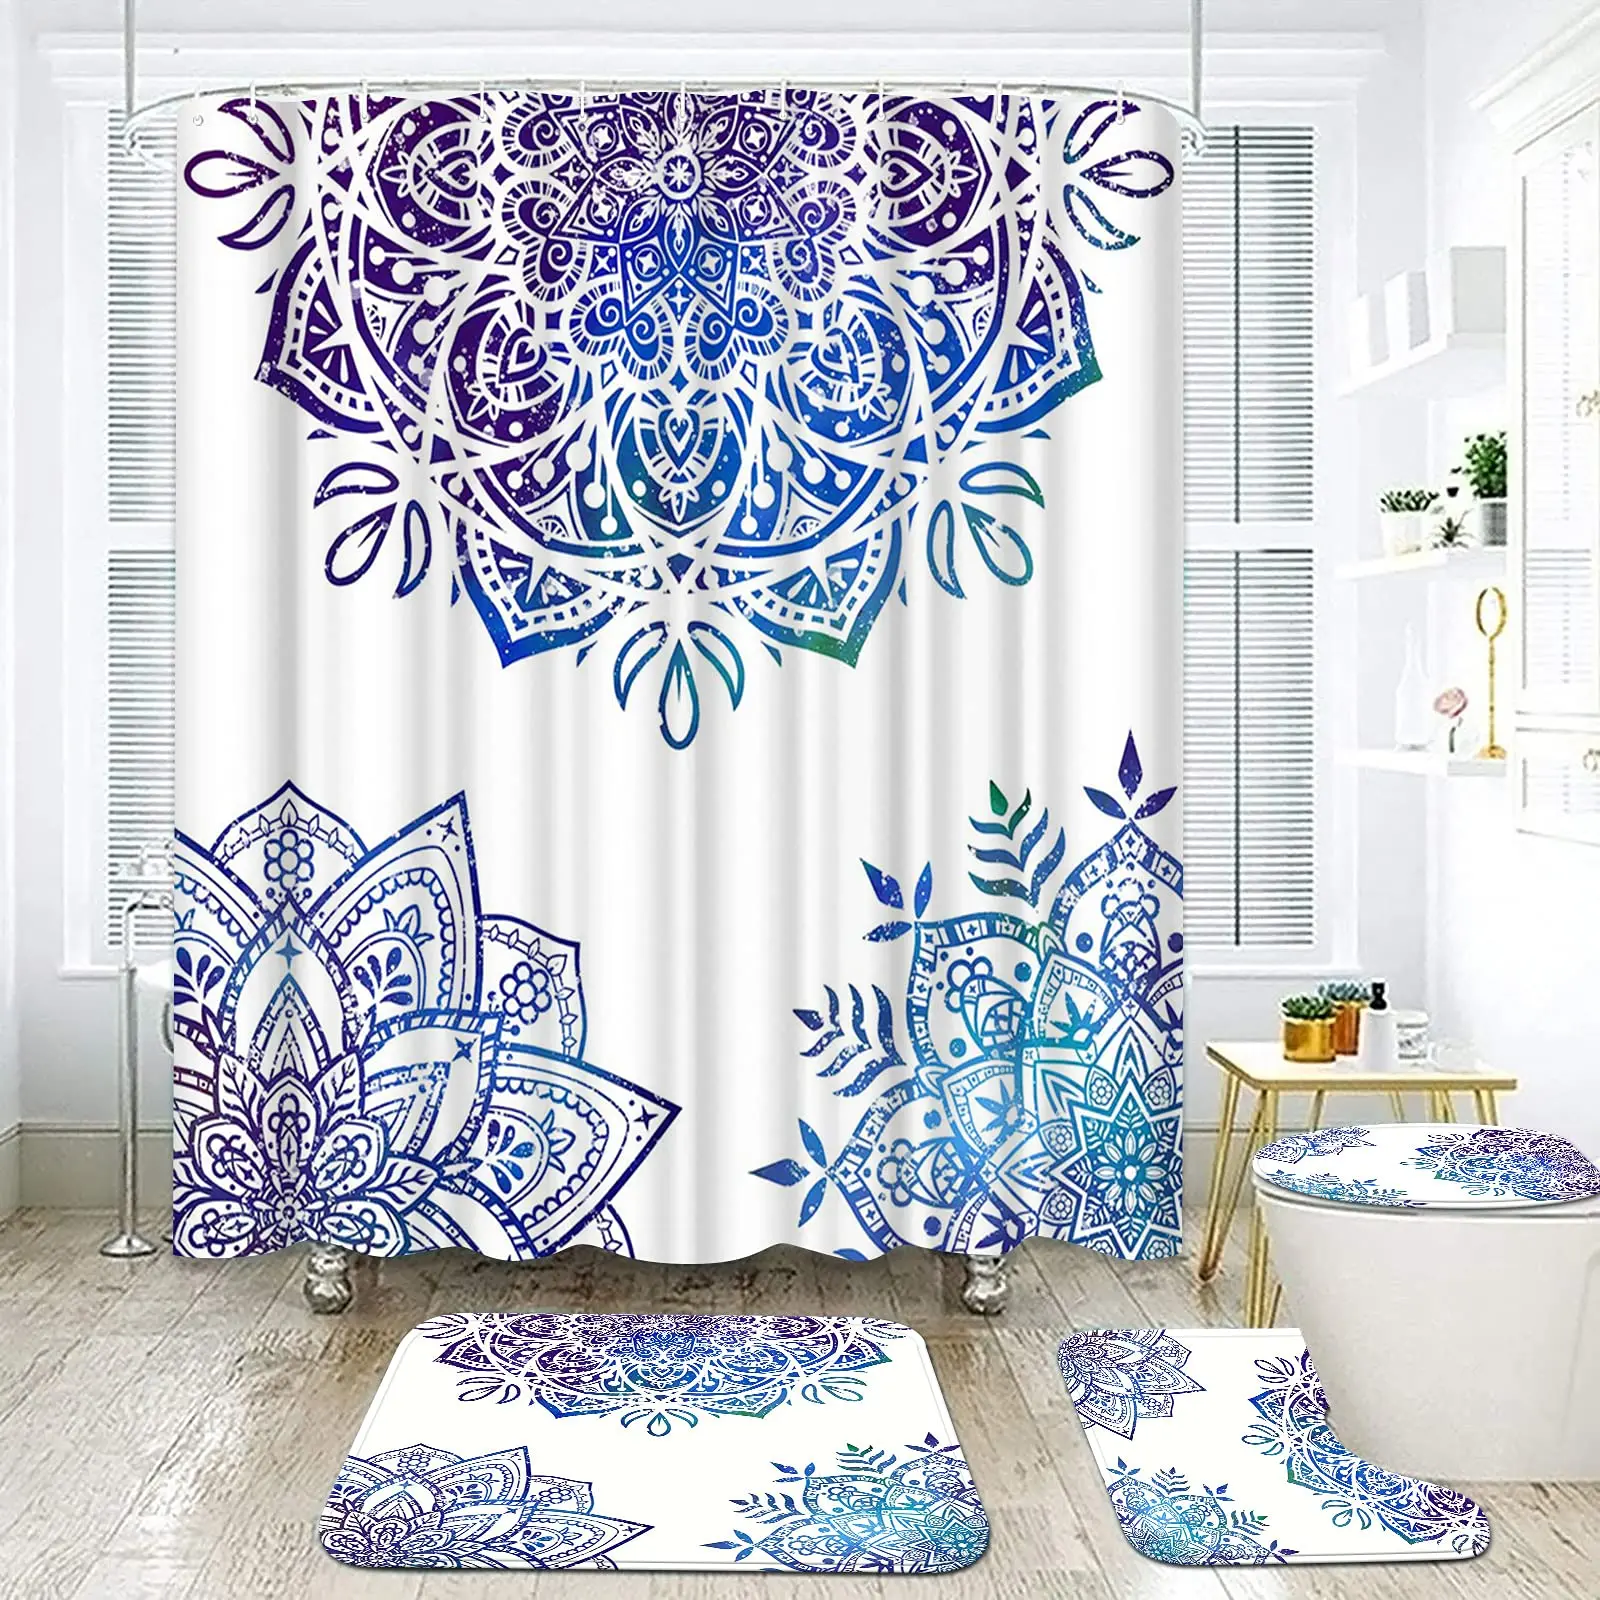 

Mandala Shower Curtain Set with Rugs Bohemia Flower Boho Shower Curtain with Bath Mat Bath Rugs Bathroom Decor Set of 4 Pieces